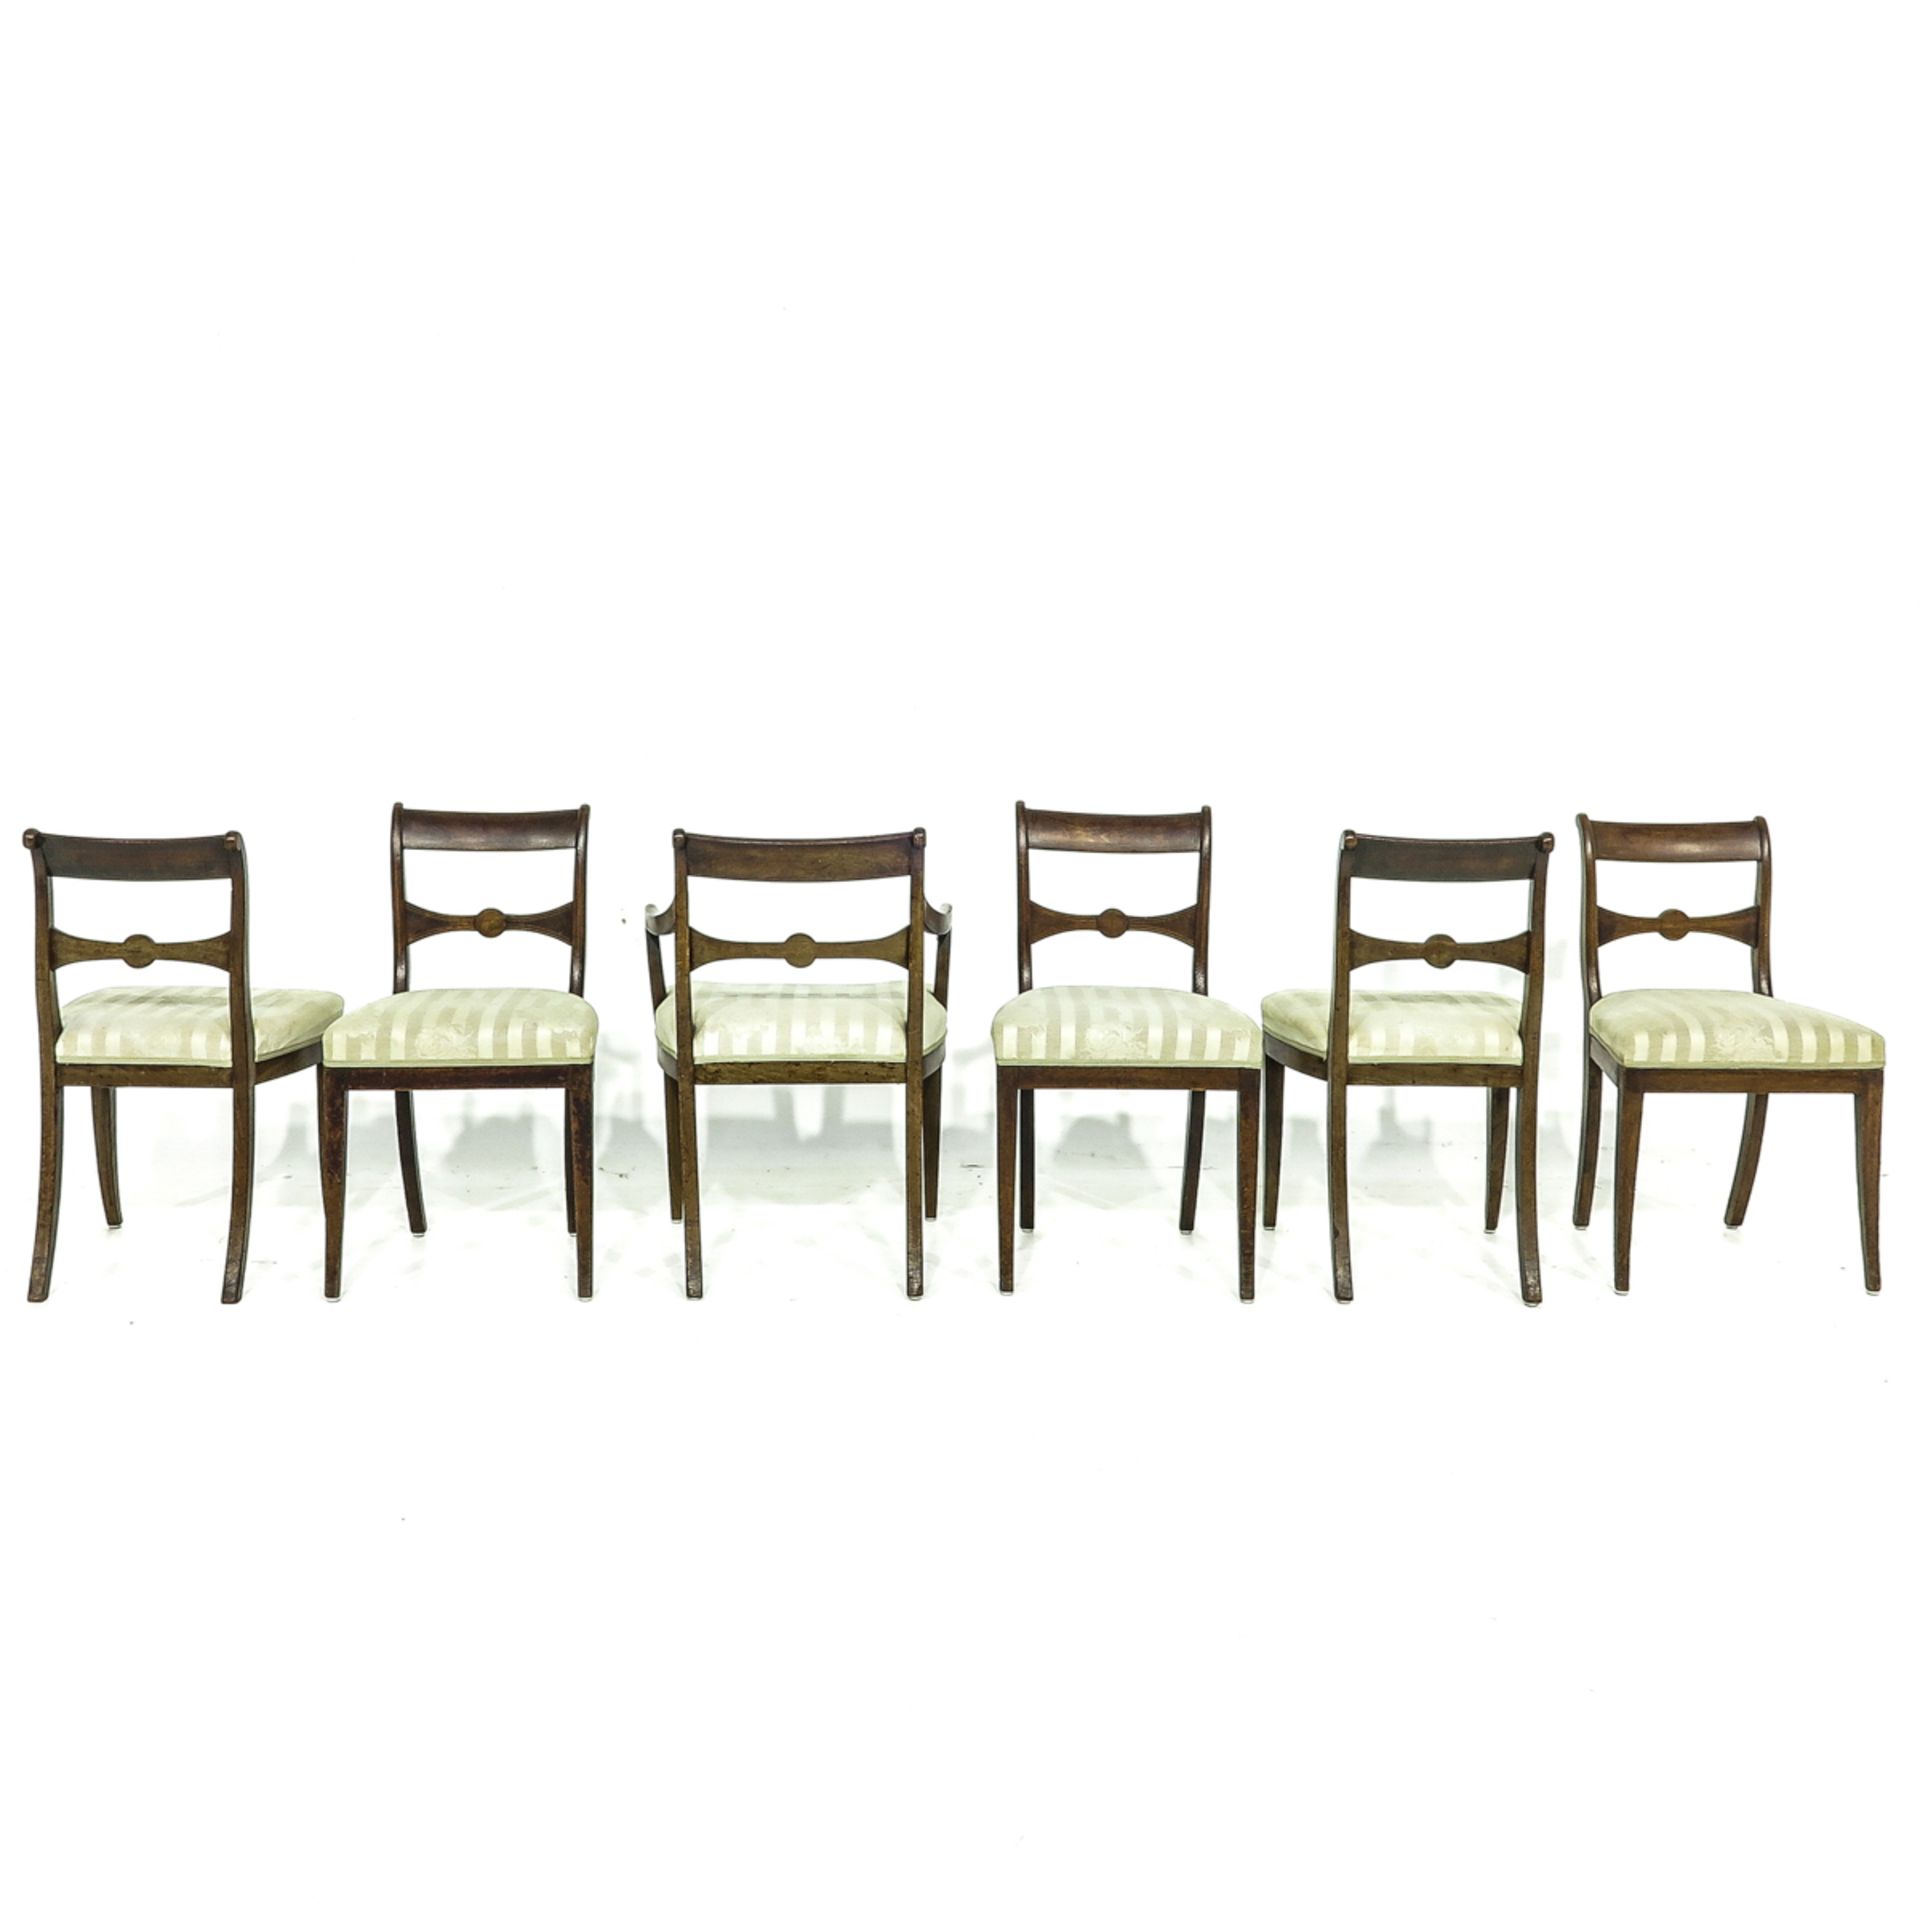 A Set of 6 19th Century English Mahogany Chairs - Image 3 of 9